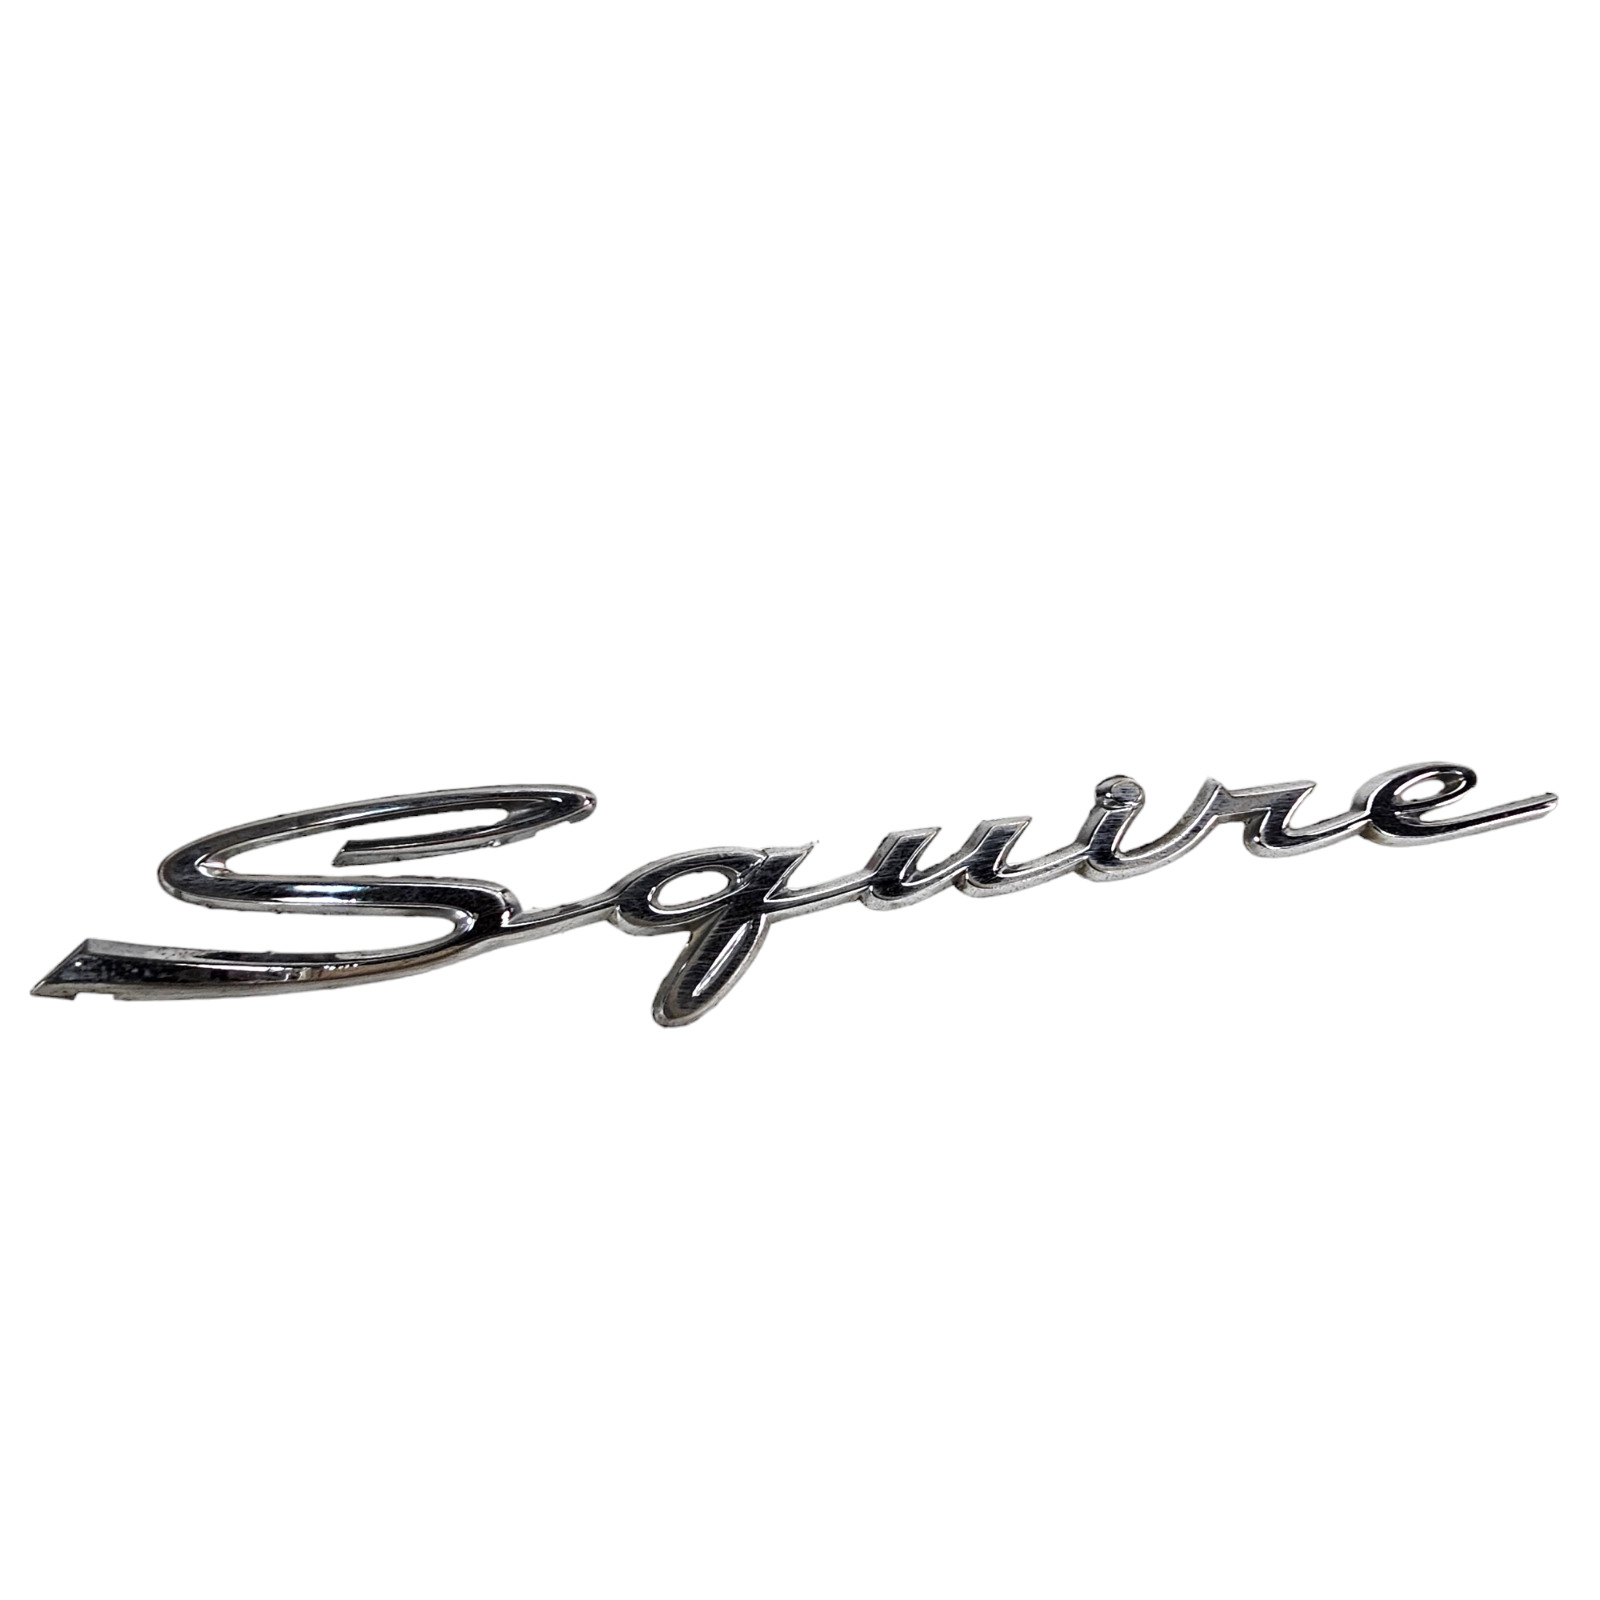 Vintage Ford Squire Ornament Script Emblem Silver Metal 1955-1959